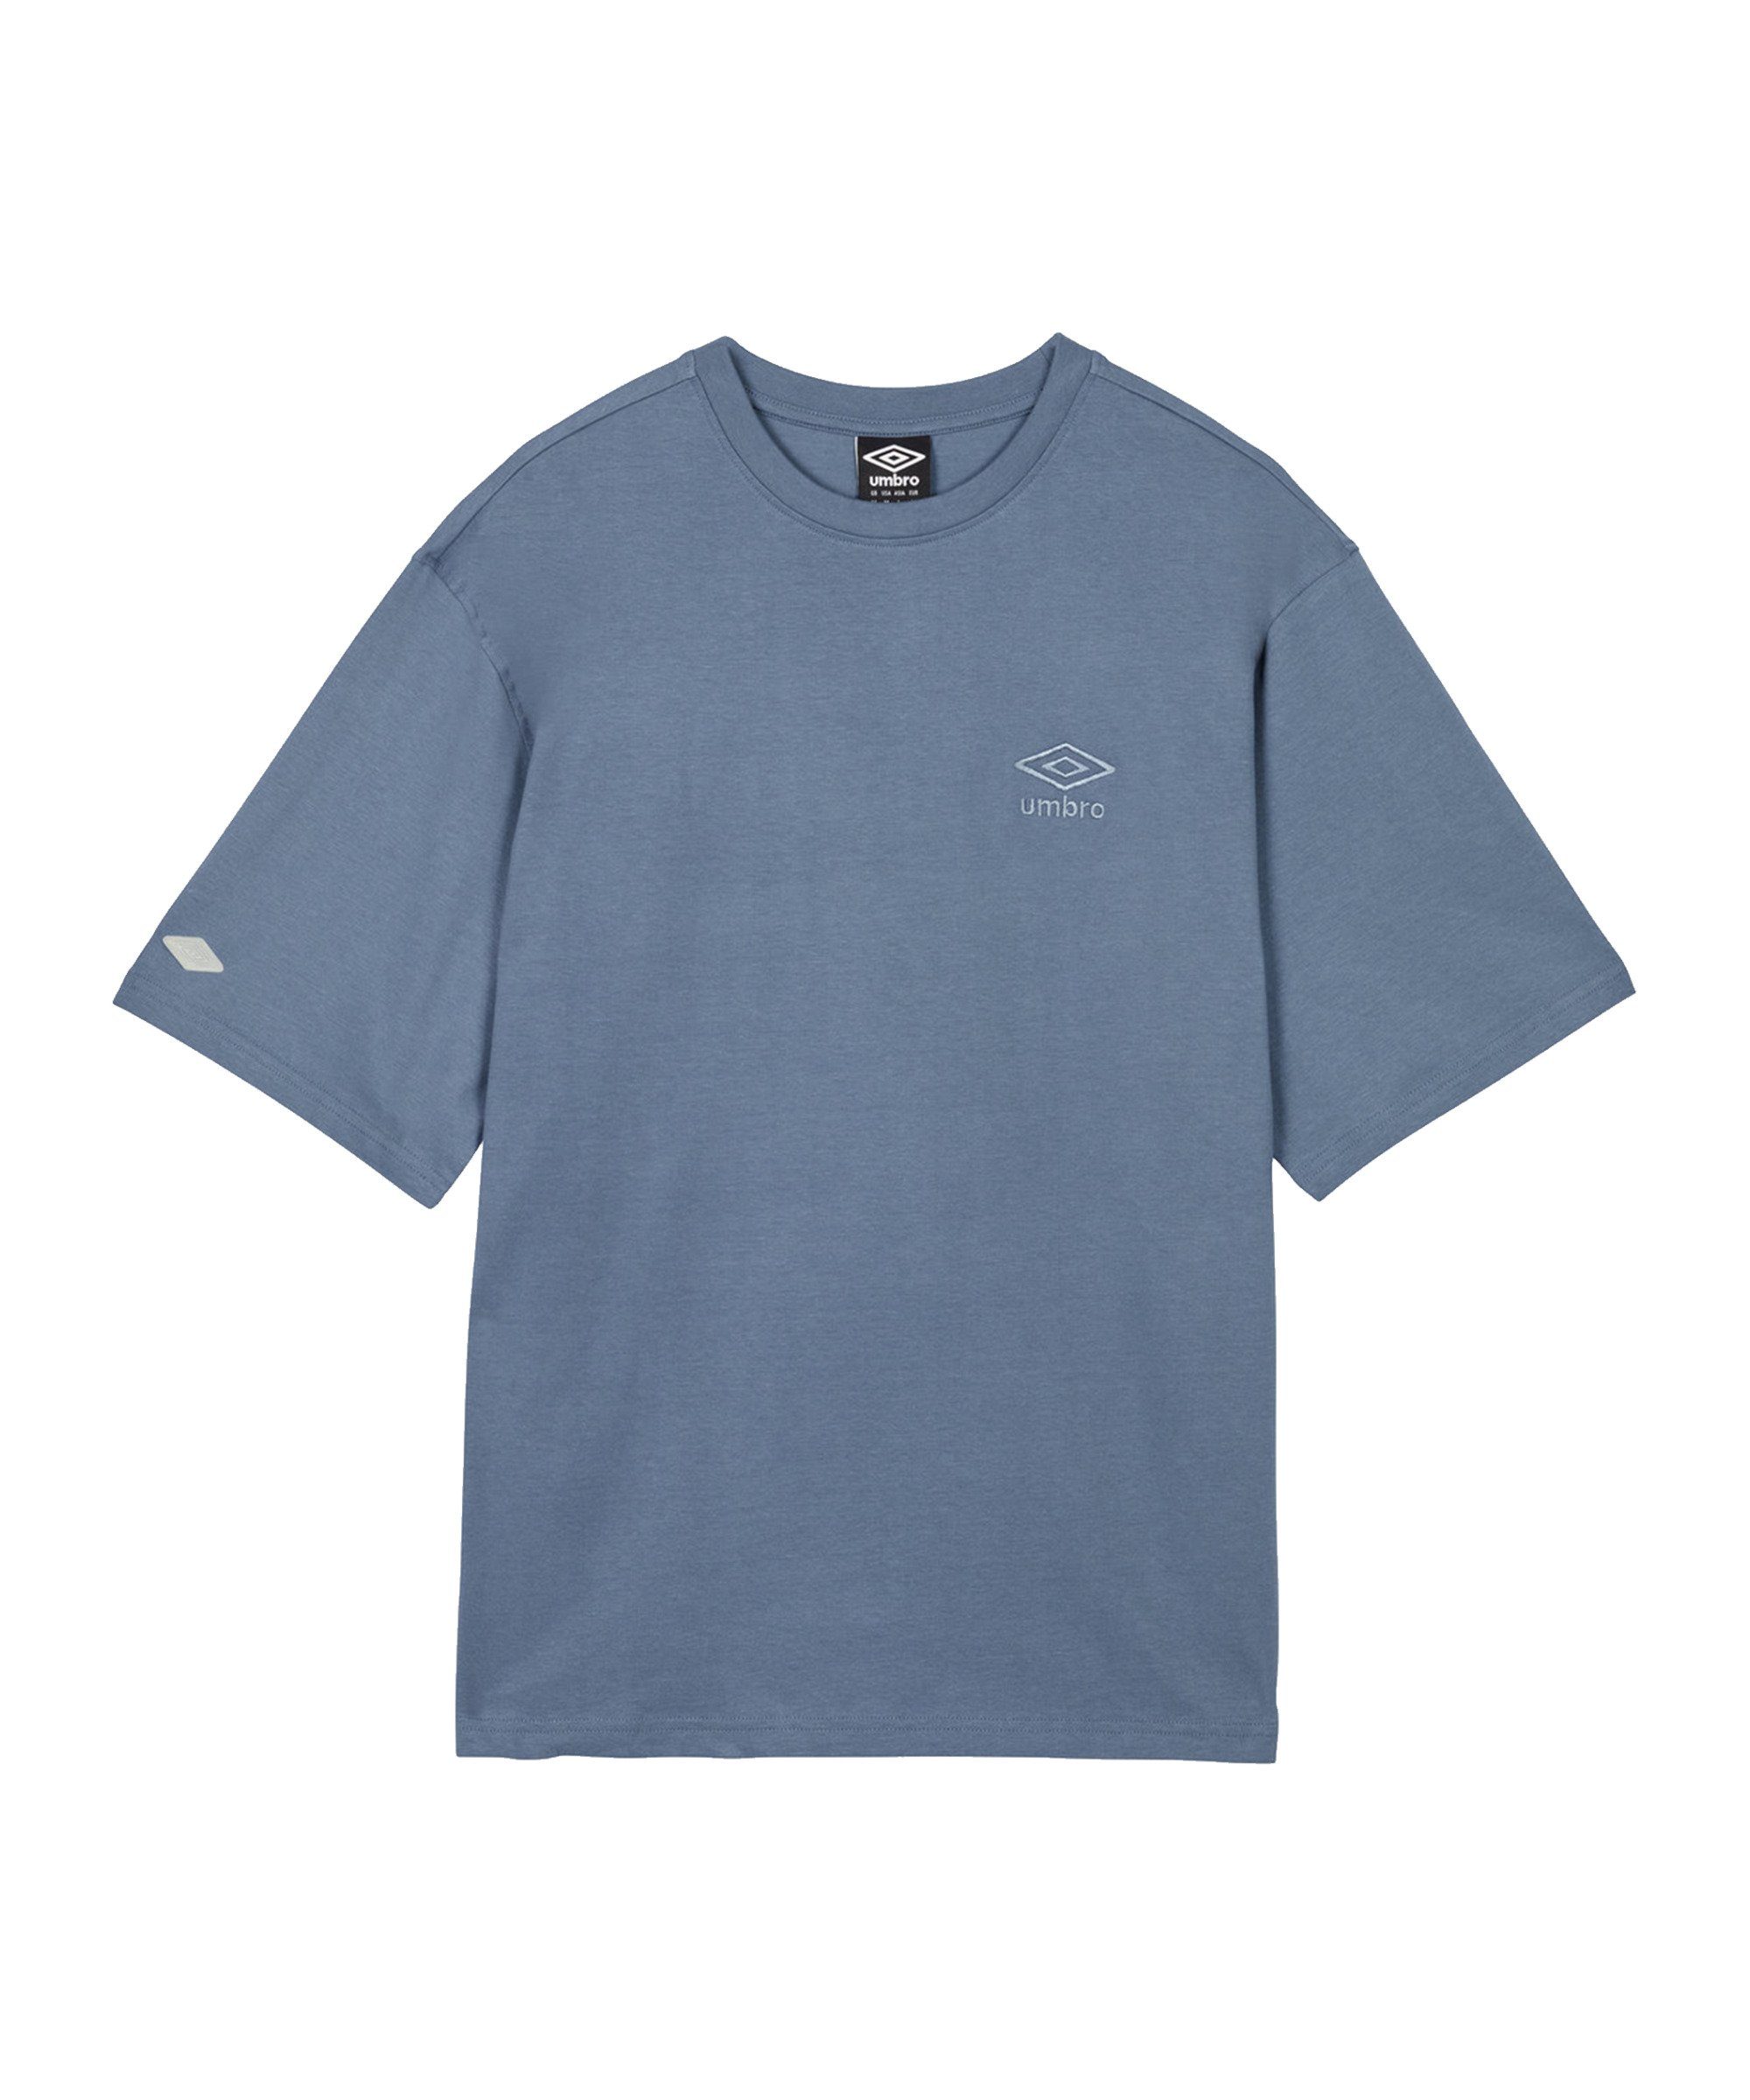 Umbro T-Shirt Sports Style Oversize T-Shirt default blau